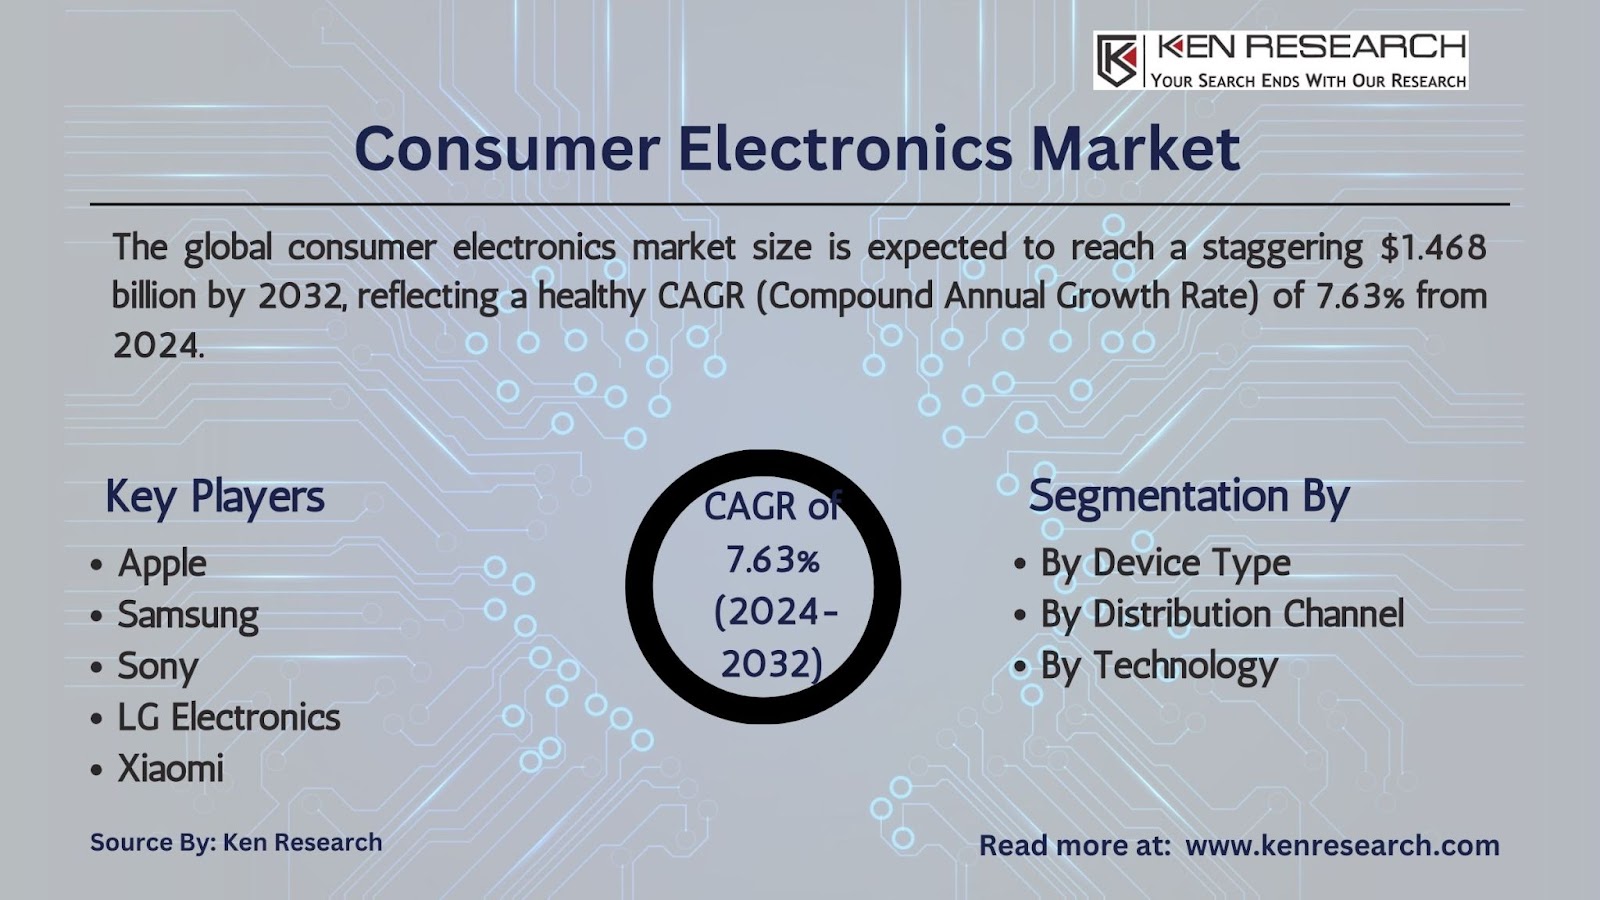 Consumer Electronics Market